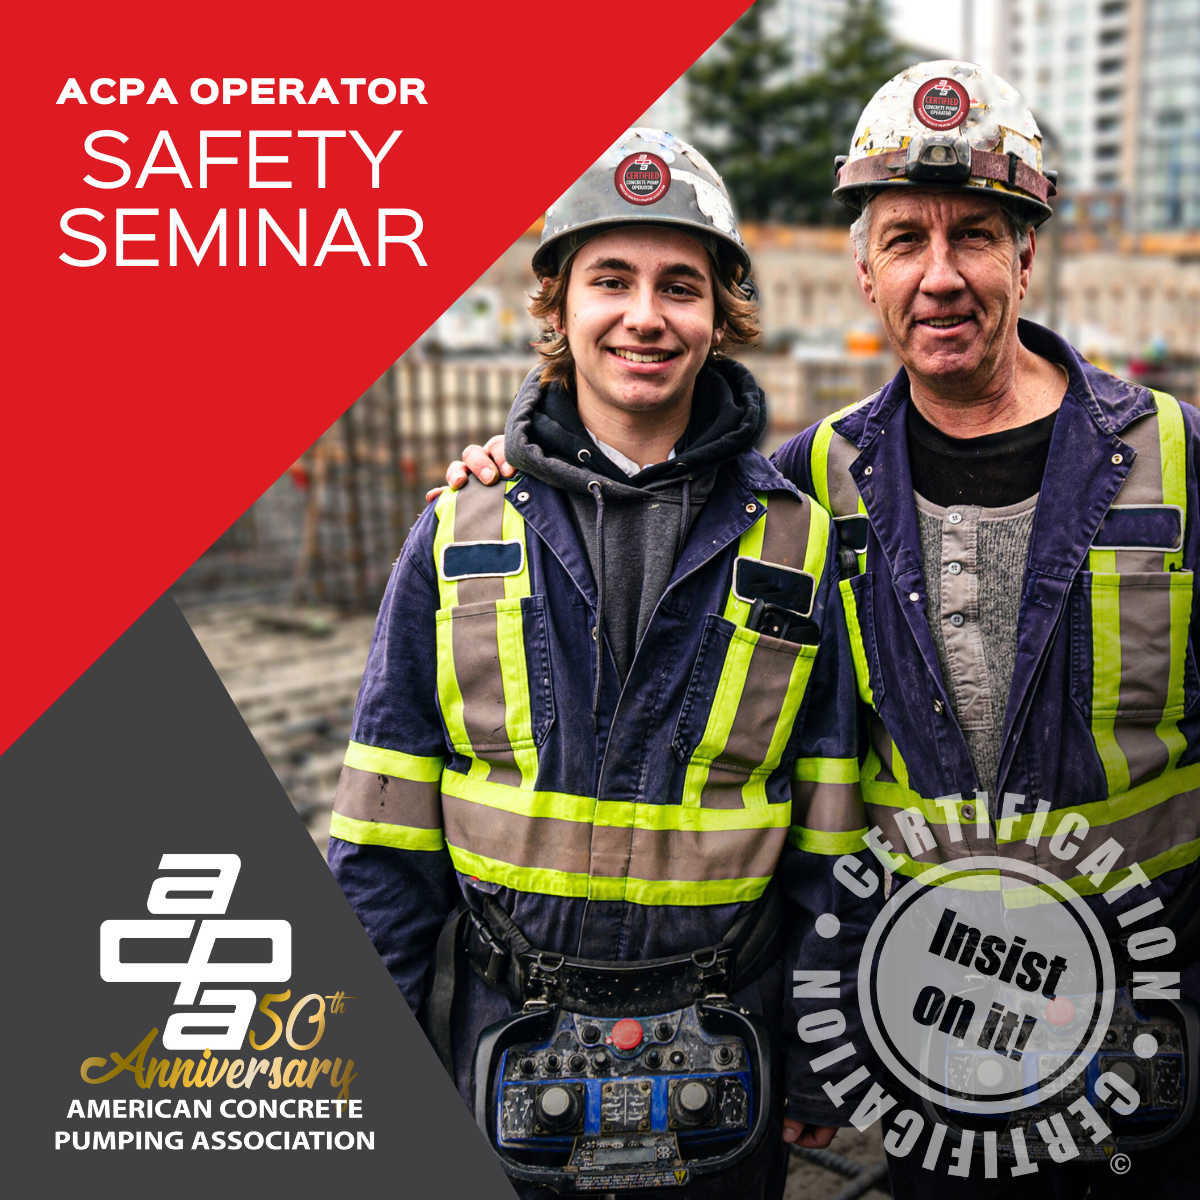 ACPA Operator Safety Seminar Image